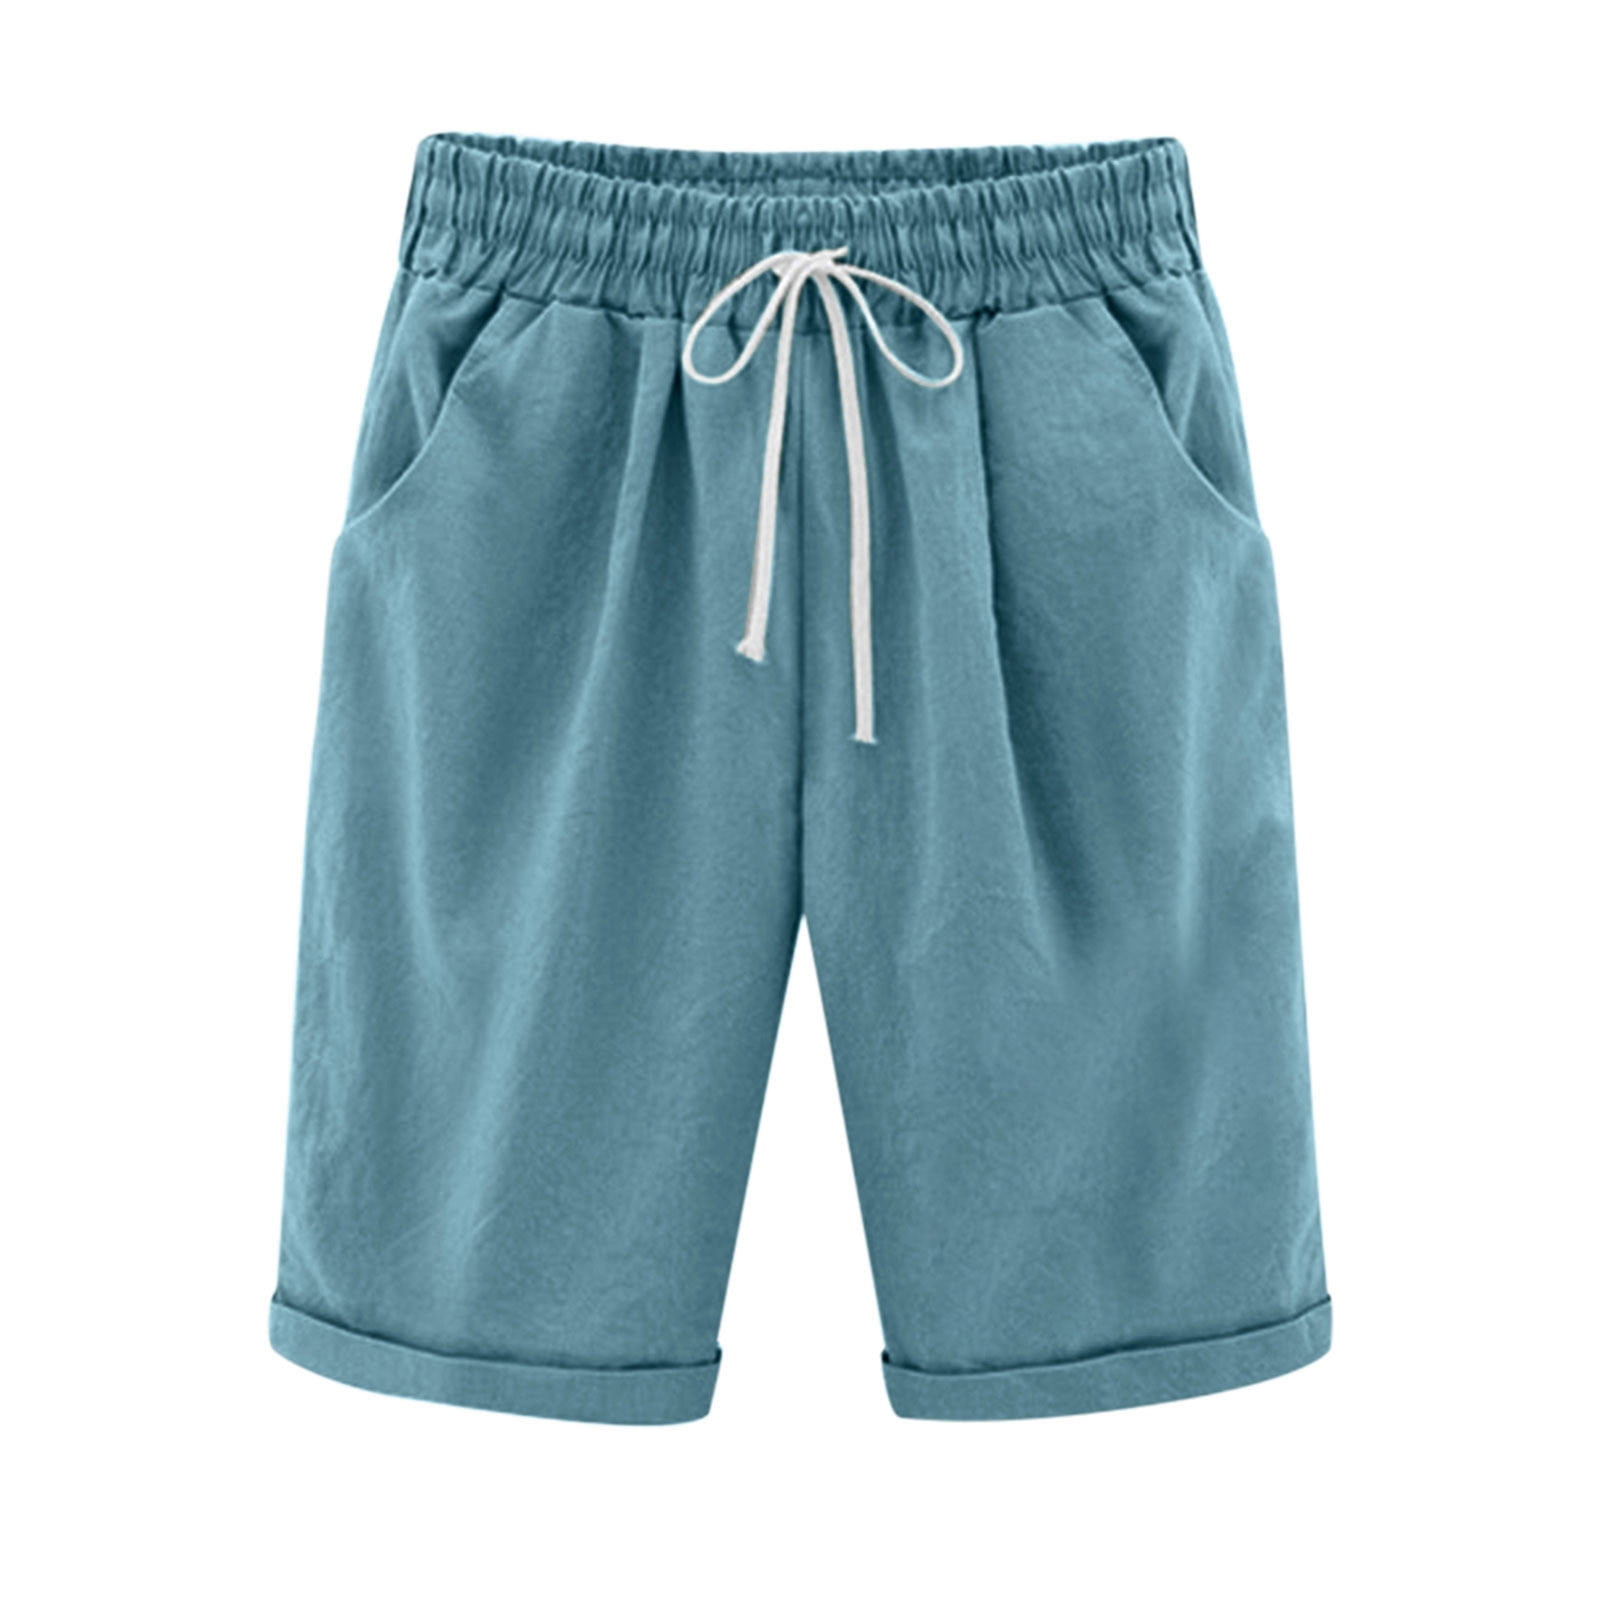 gakvbuo Summer Savings Clearance!Dressy Plus Size Bermuda Shorts For ...